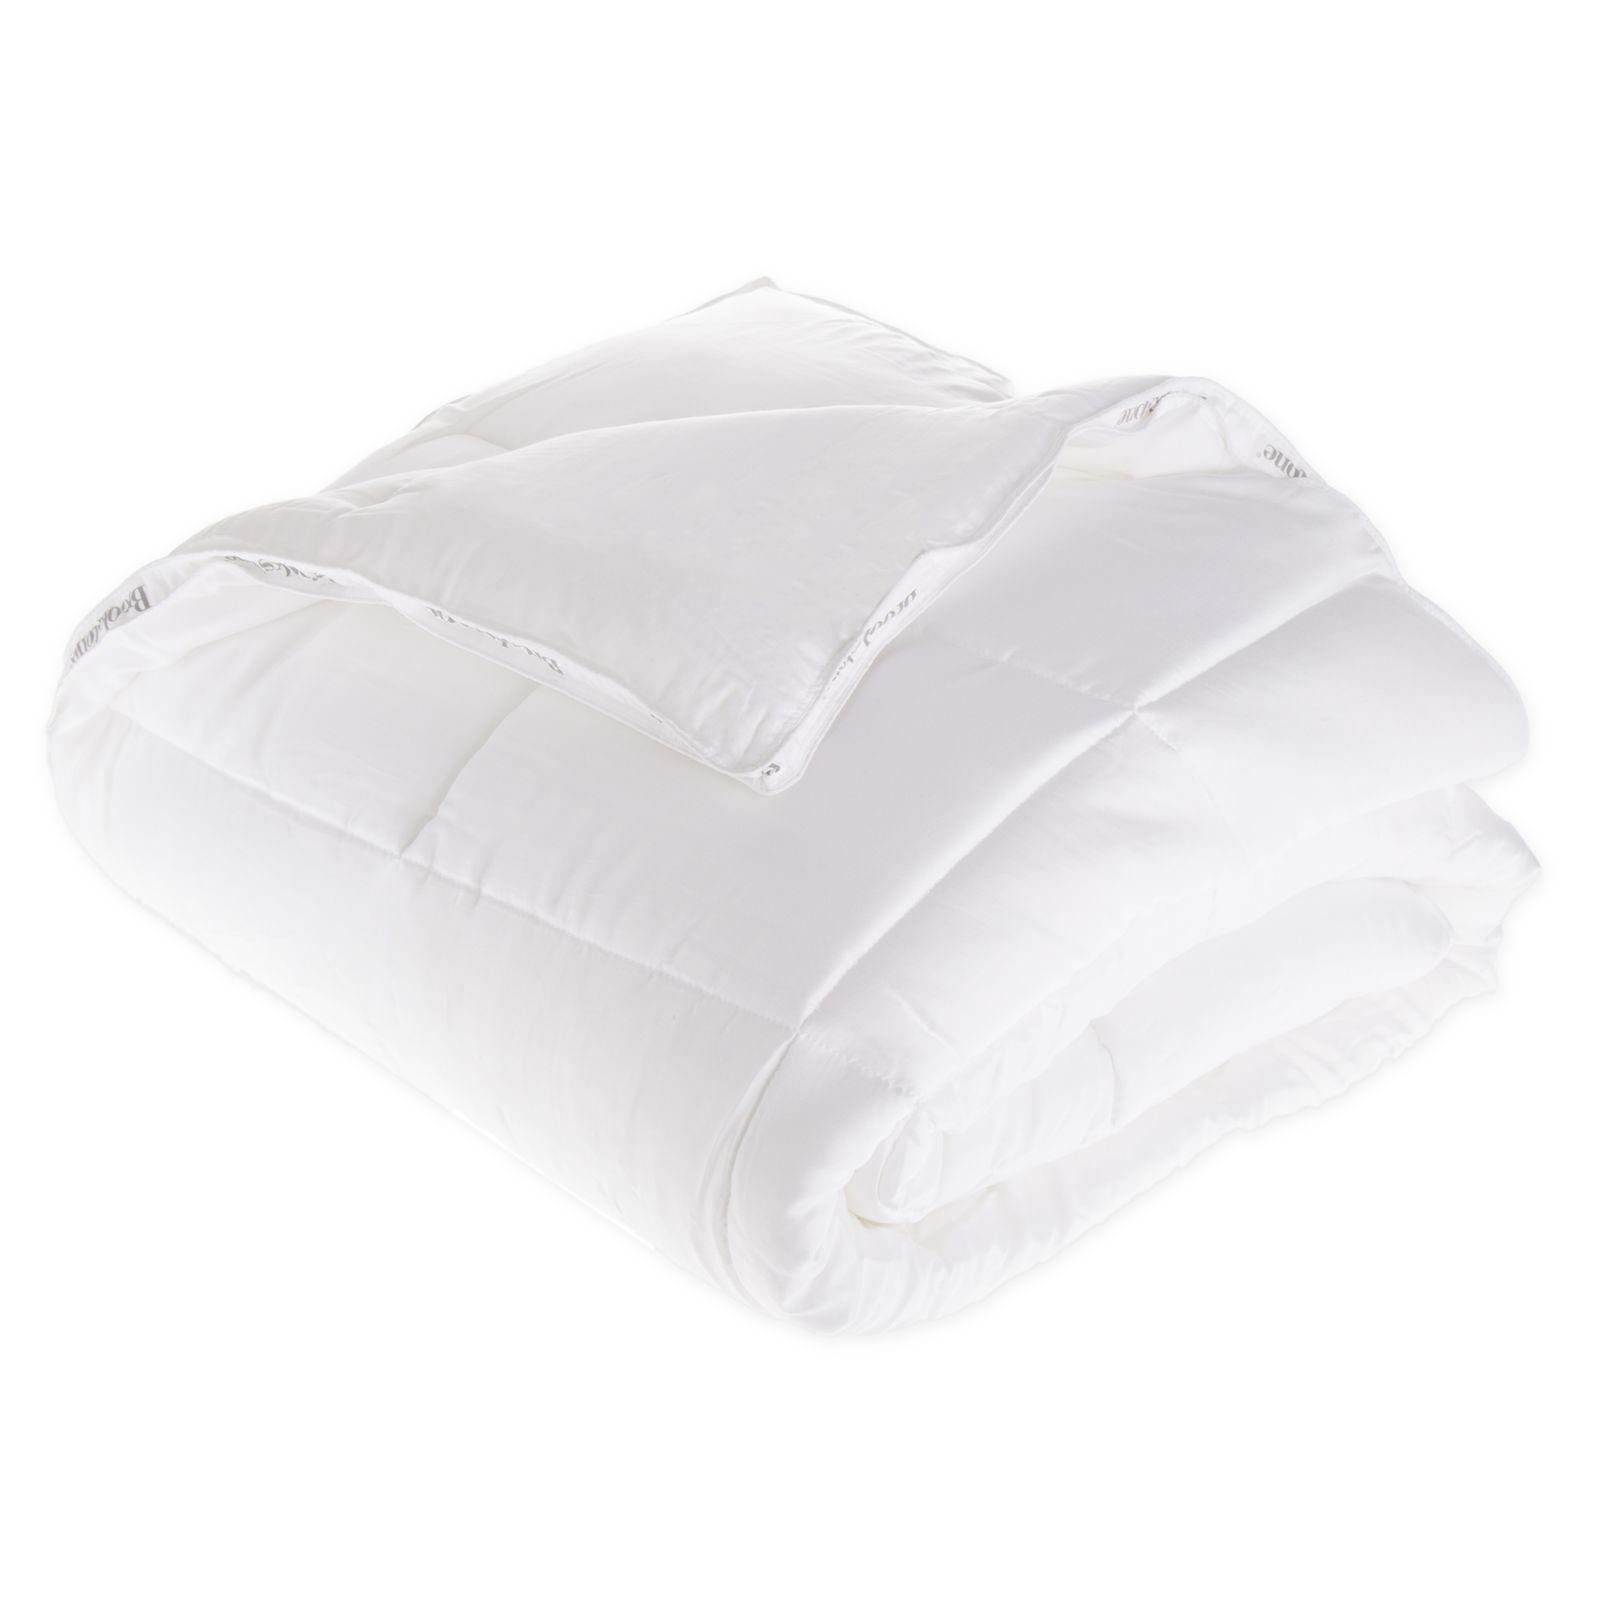 brookstone biosense pillow king size